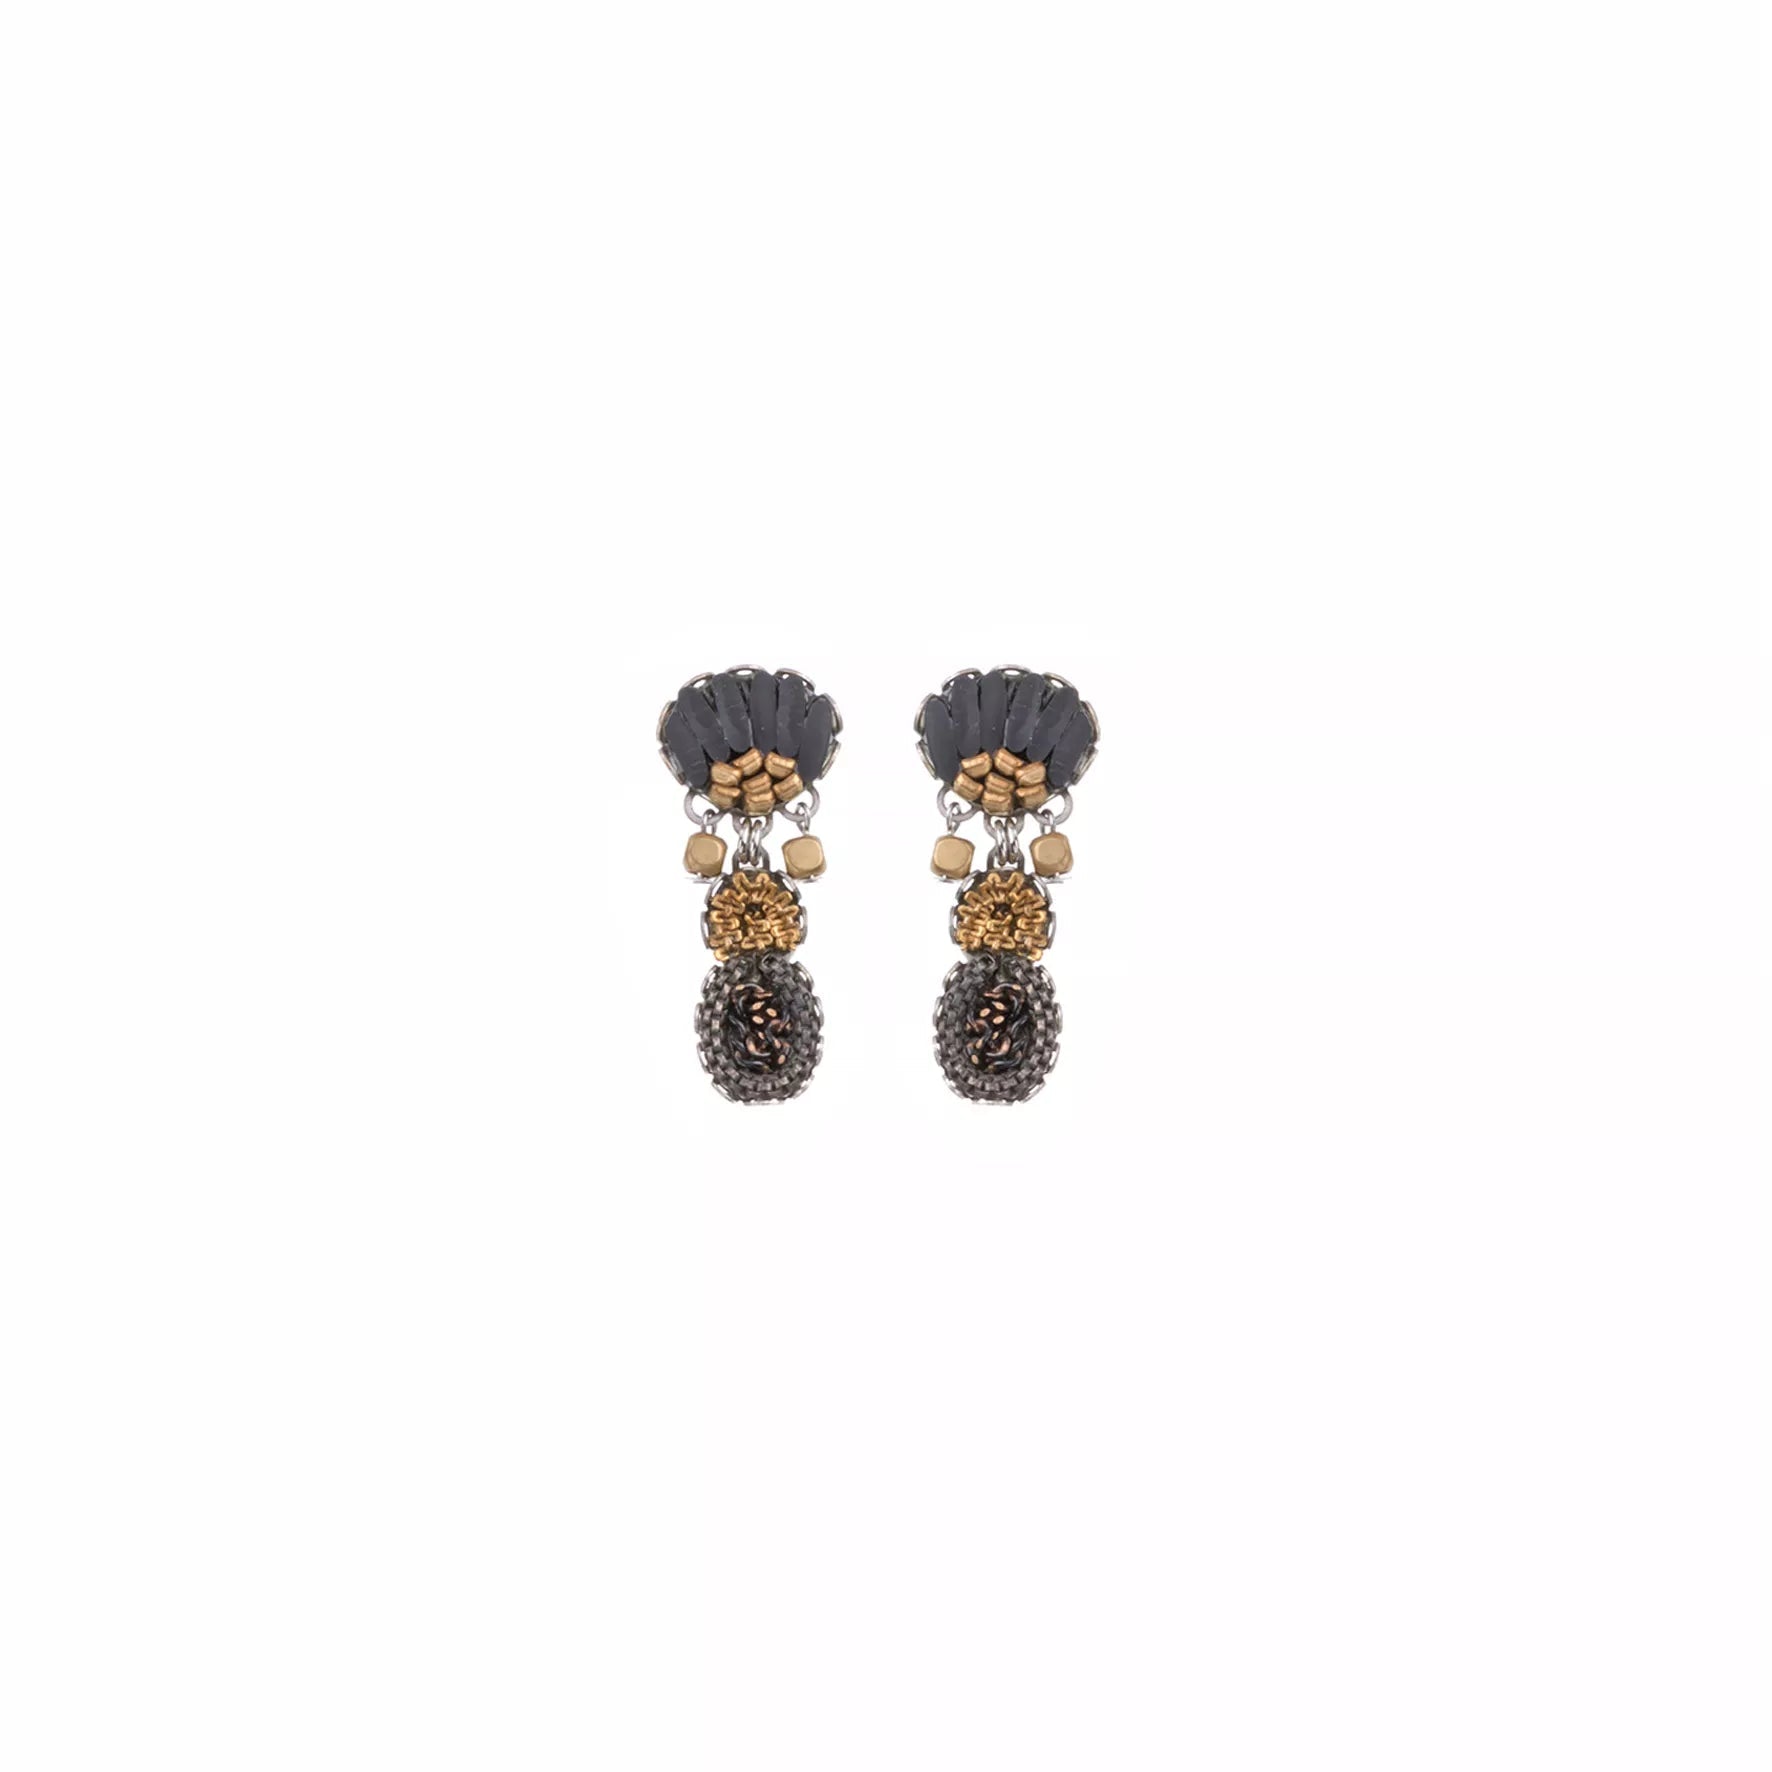 Royalty Xola Earrings - The Nancy Smillie Shop - Art, Jewellery & Designer Gifts Glasgow